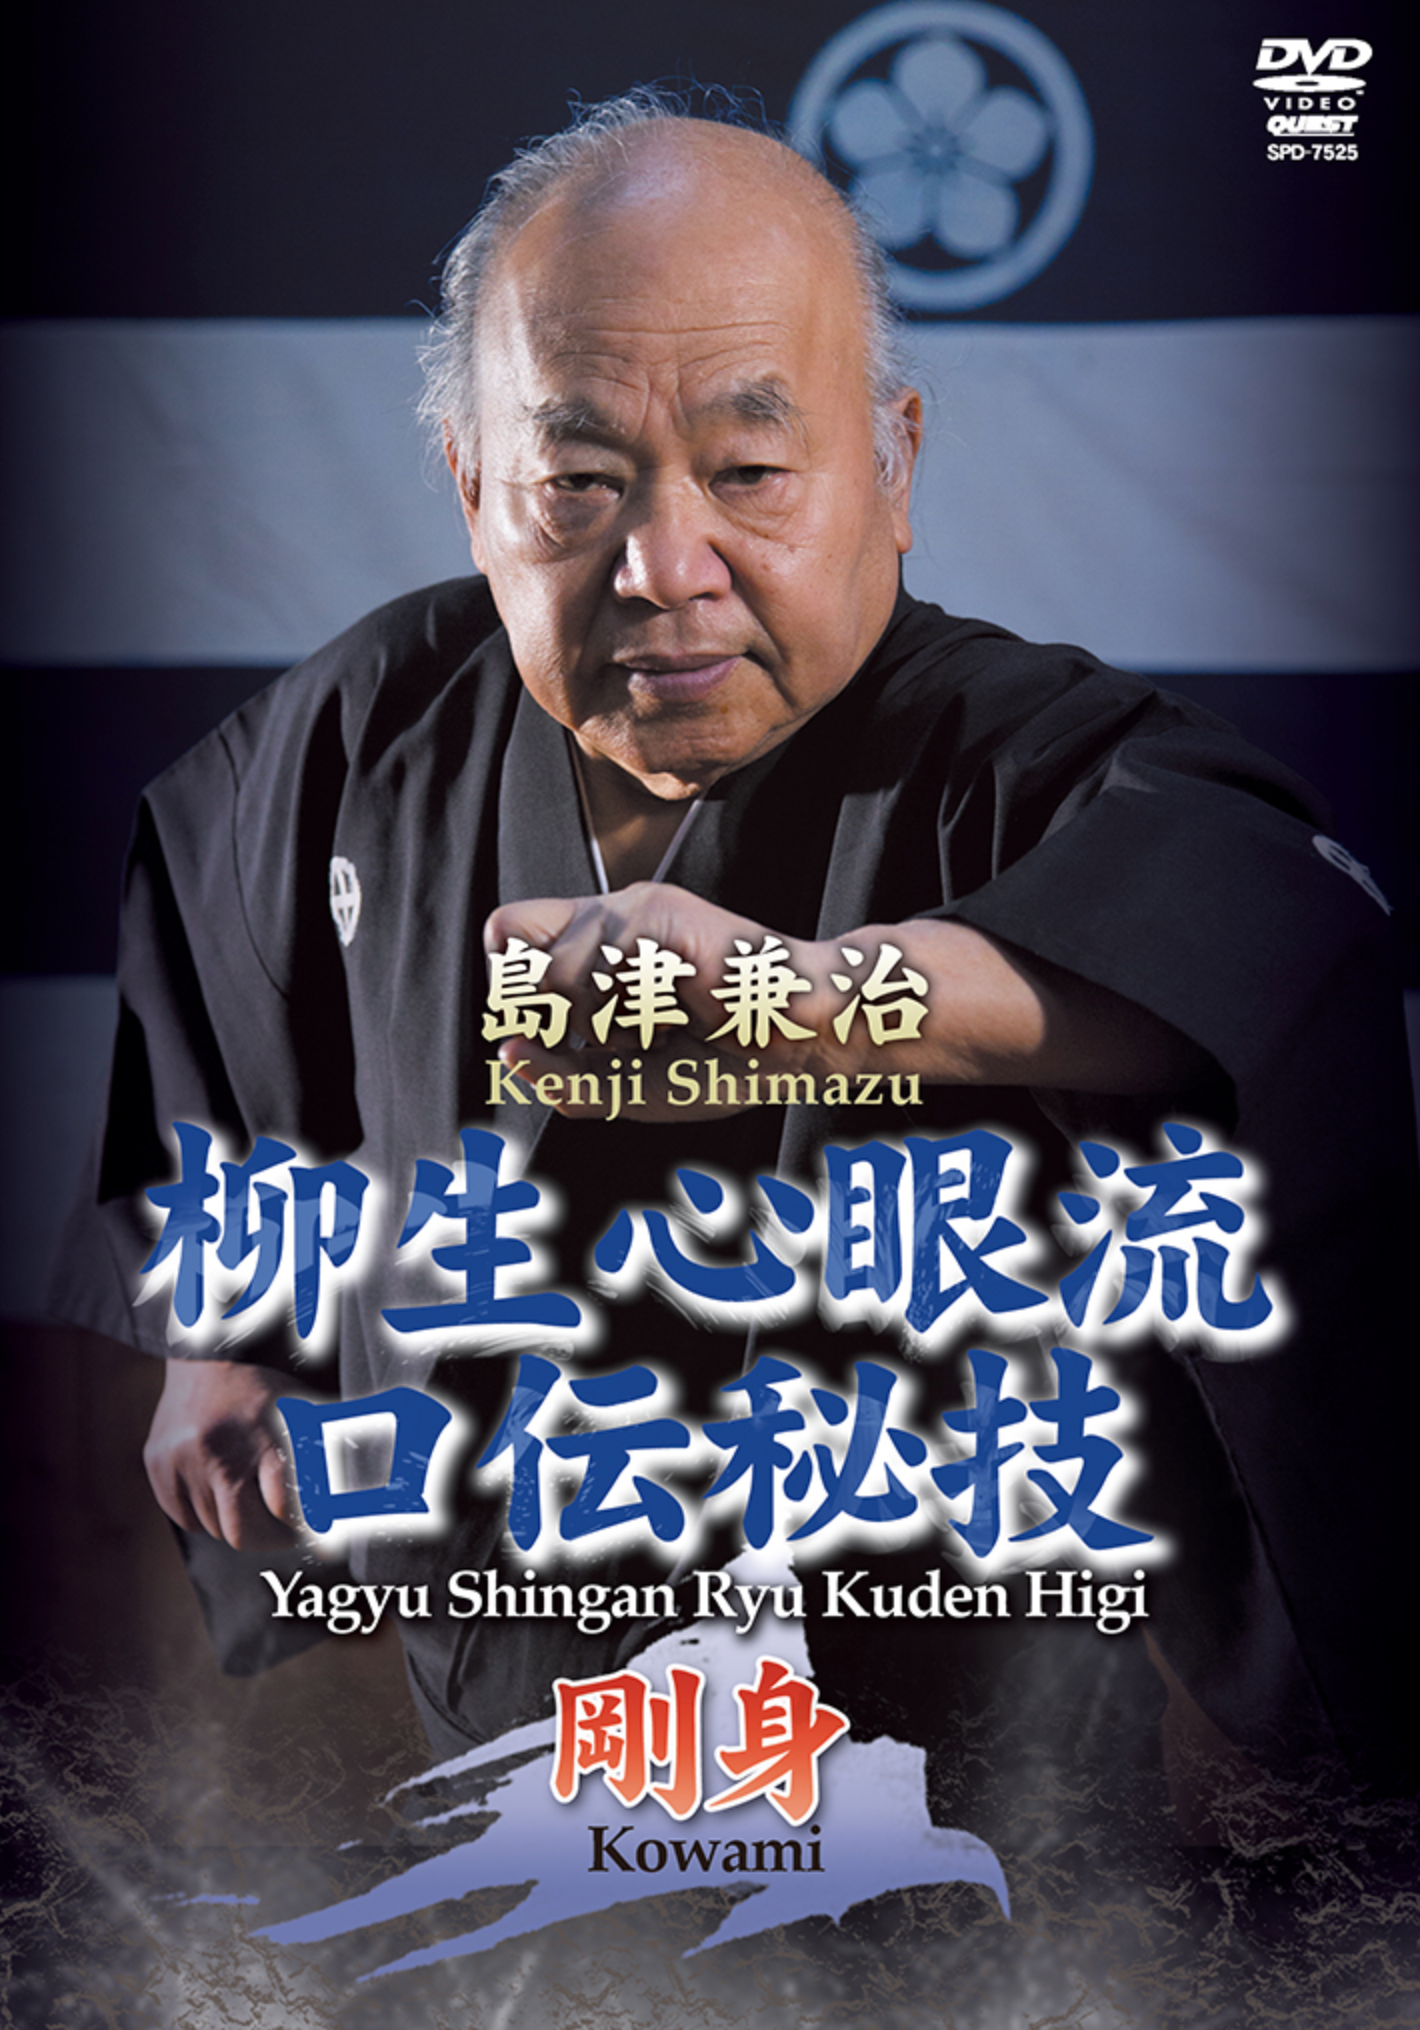 Yagyu Shingan Ryu Kuden Higi Vol 1 DVD by Kenji Shimazu - Budovideos Inc